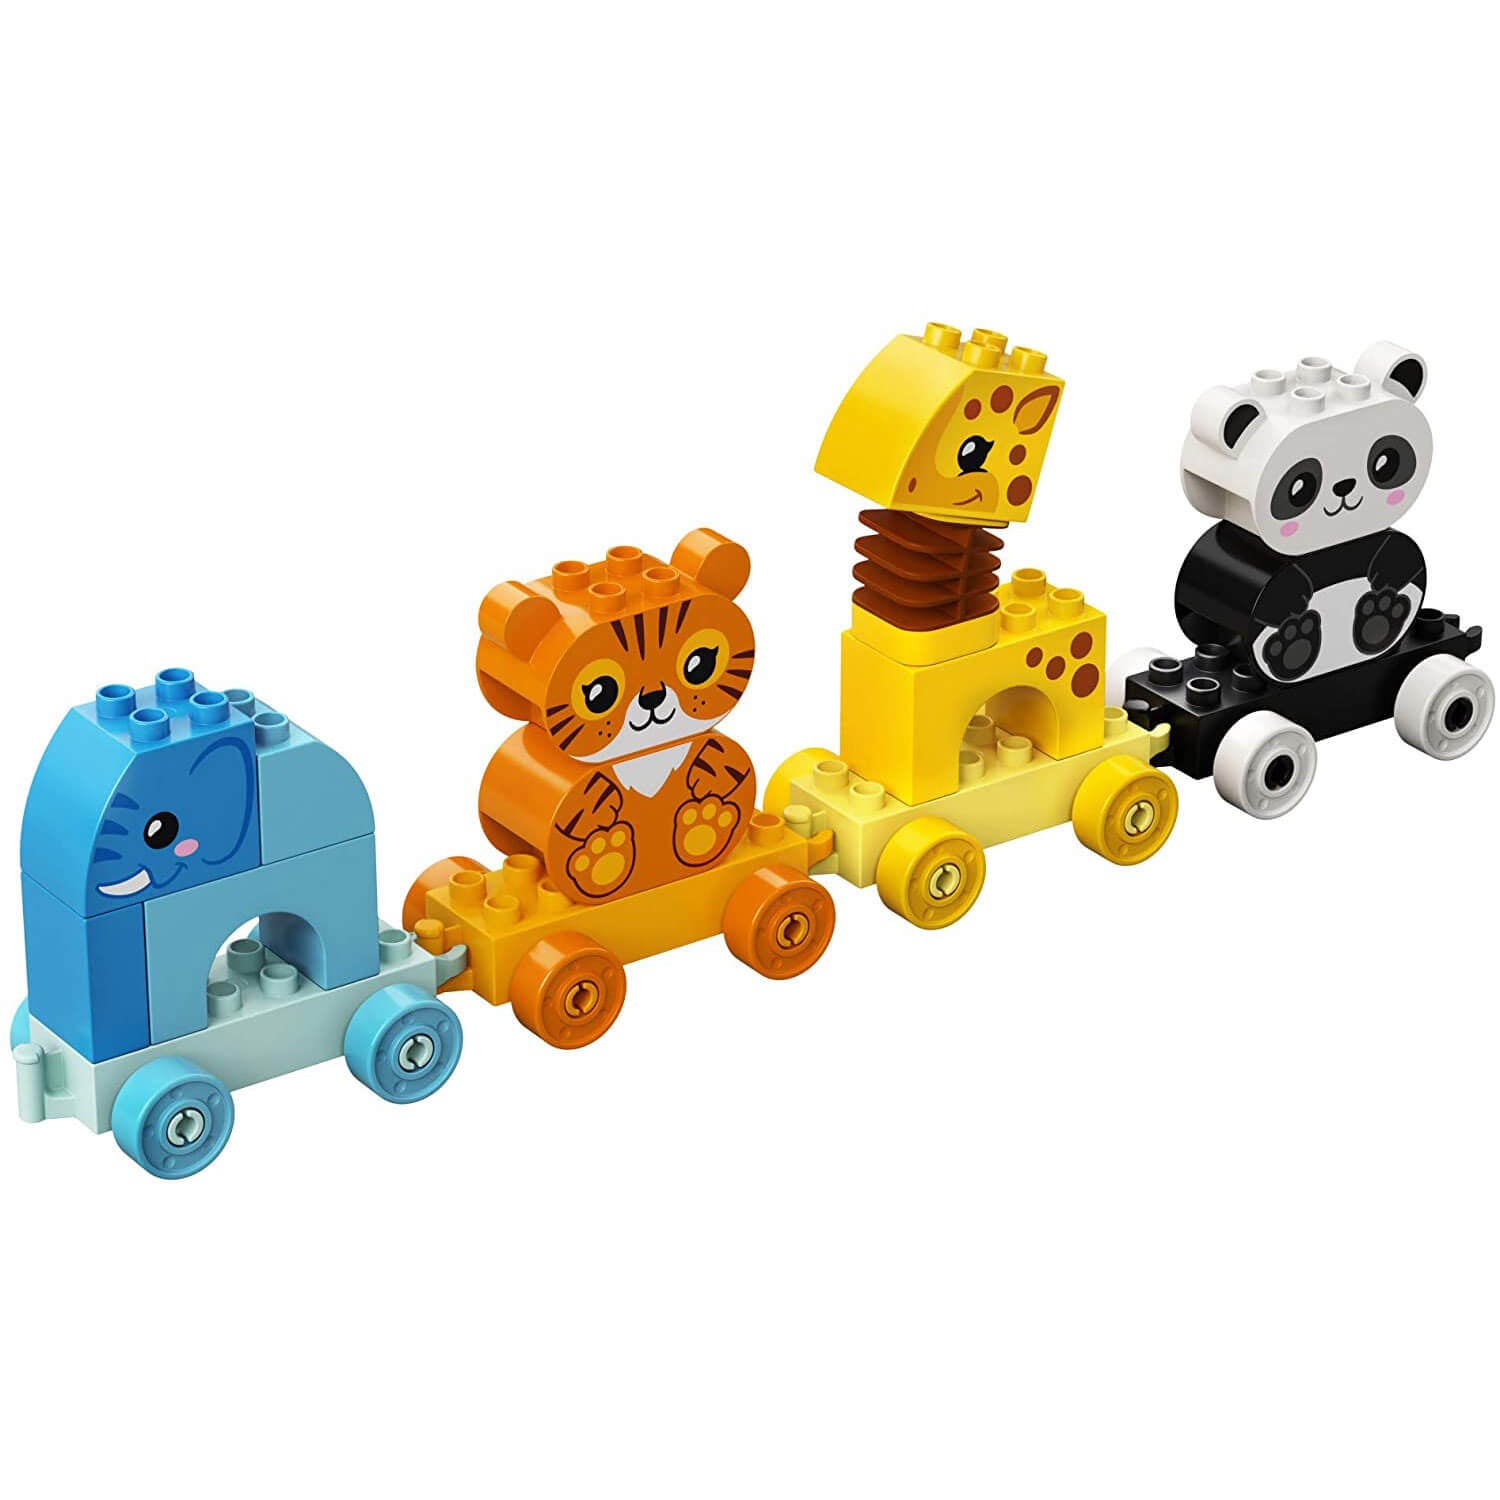 LEGO DUPLO My First Animal Train 15 Piece Building Set (10955)